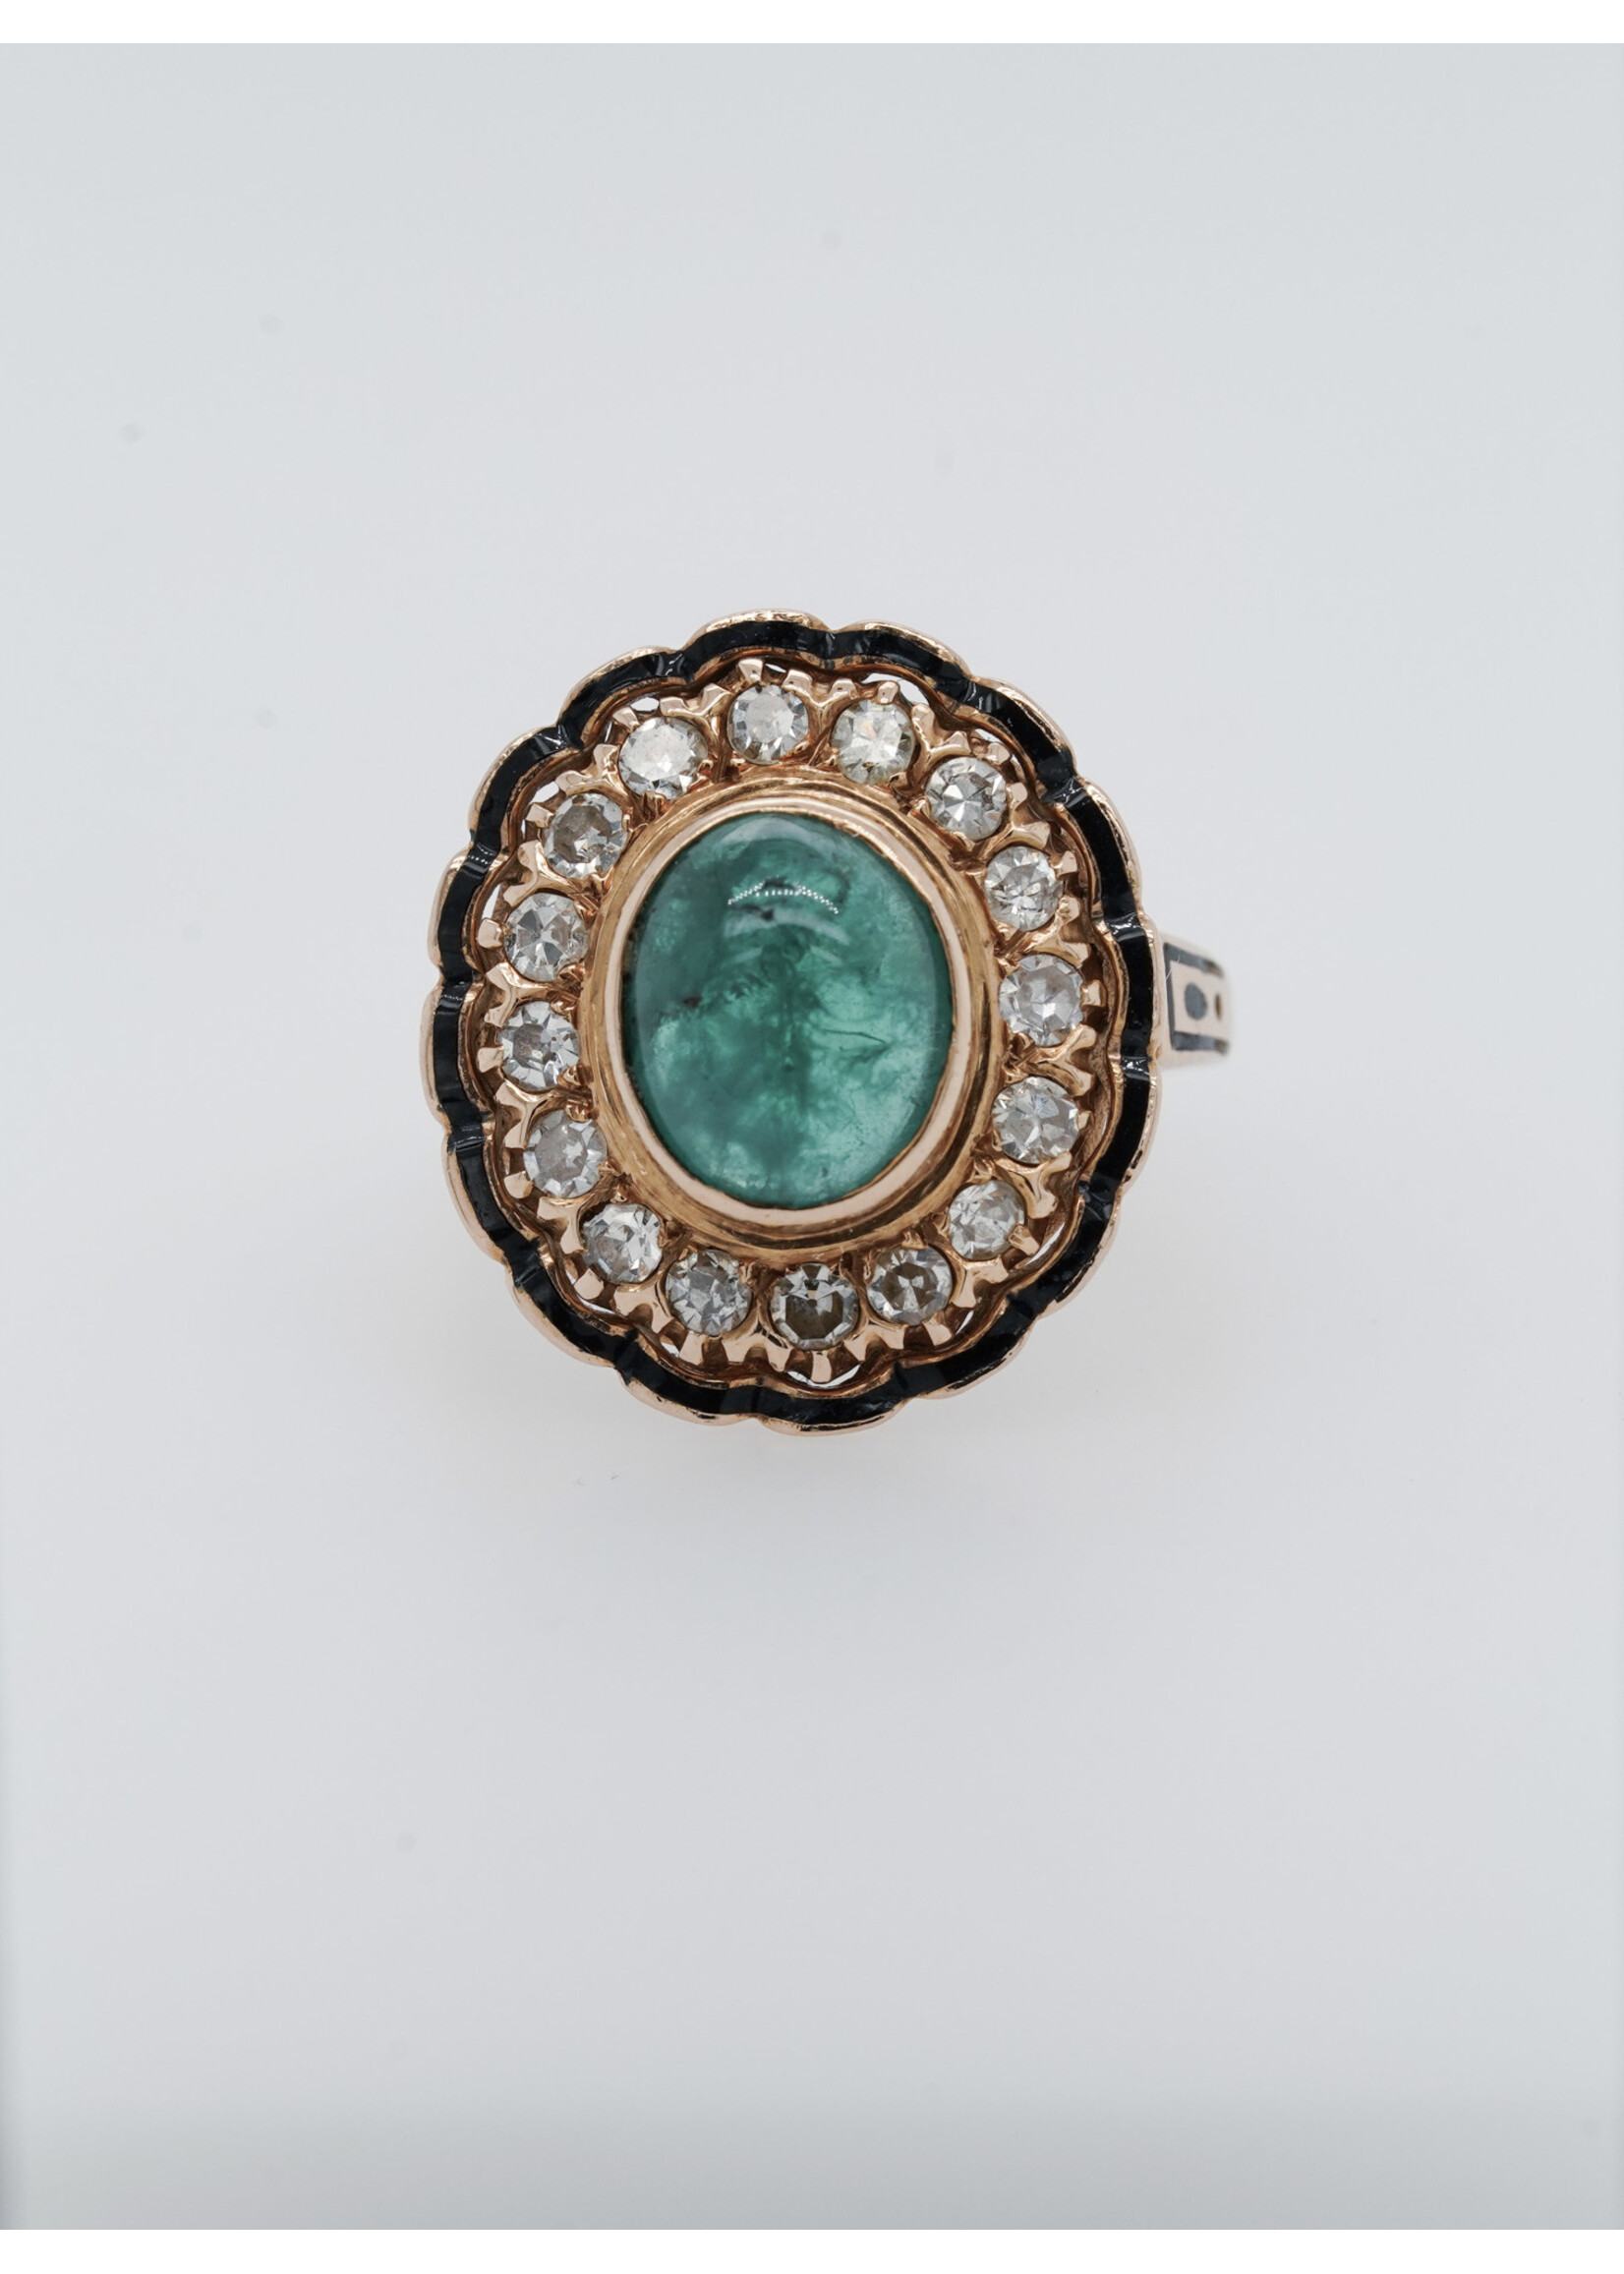 14KY 8.24g 4.02ctw Cabachon Emerald & Diamond Fashion Ring (size 7.5)